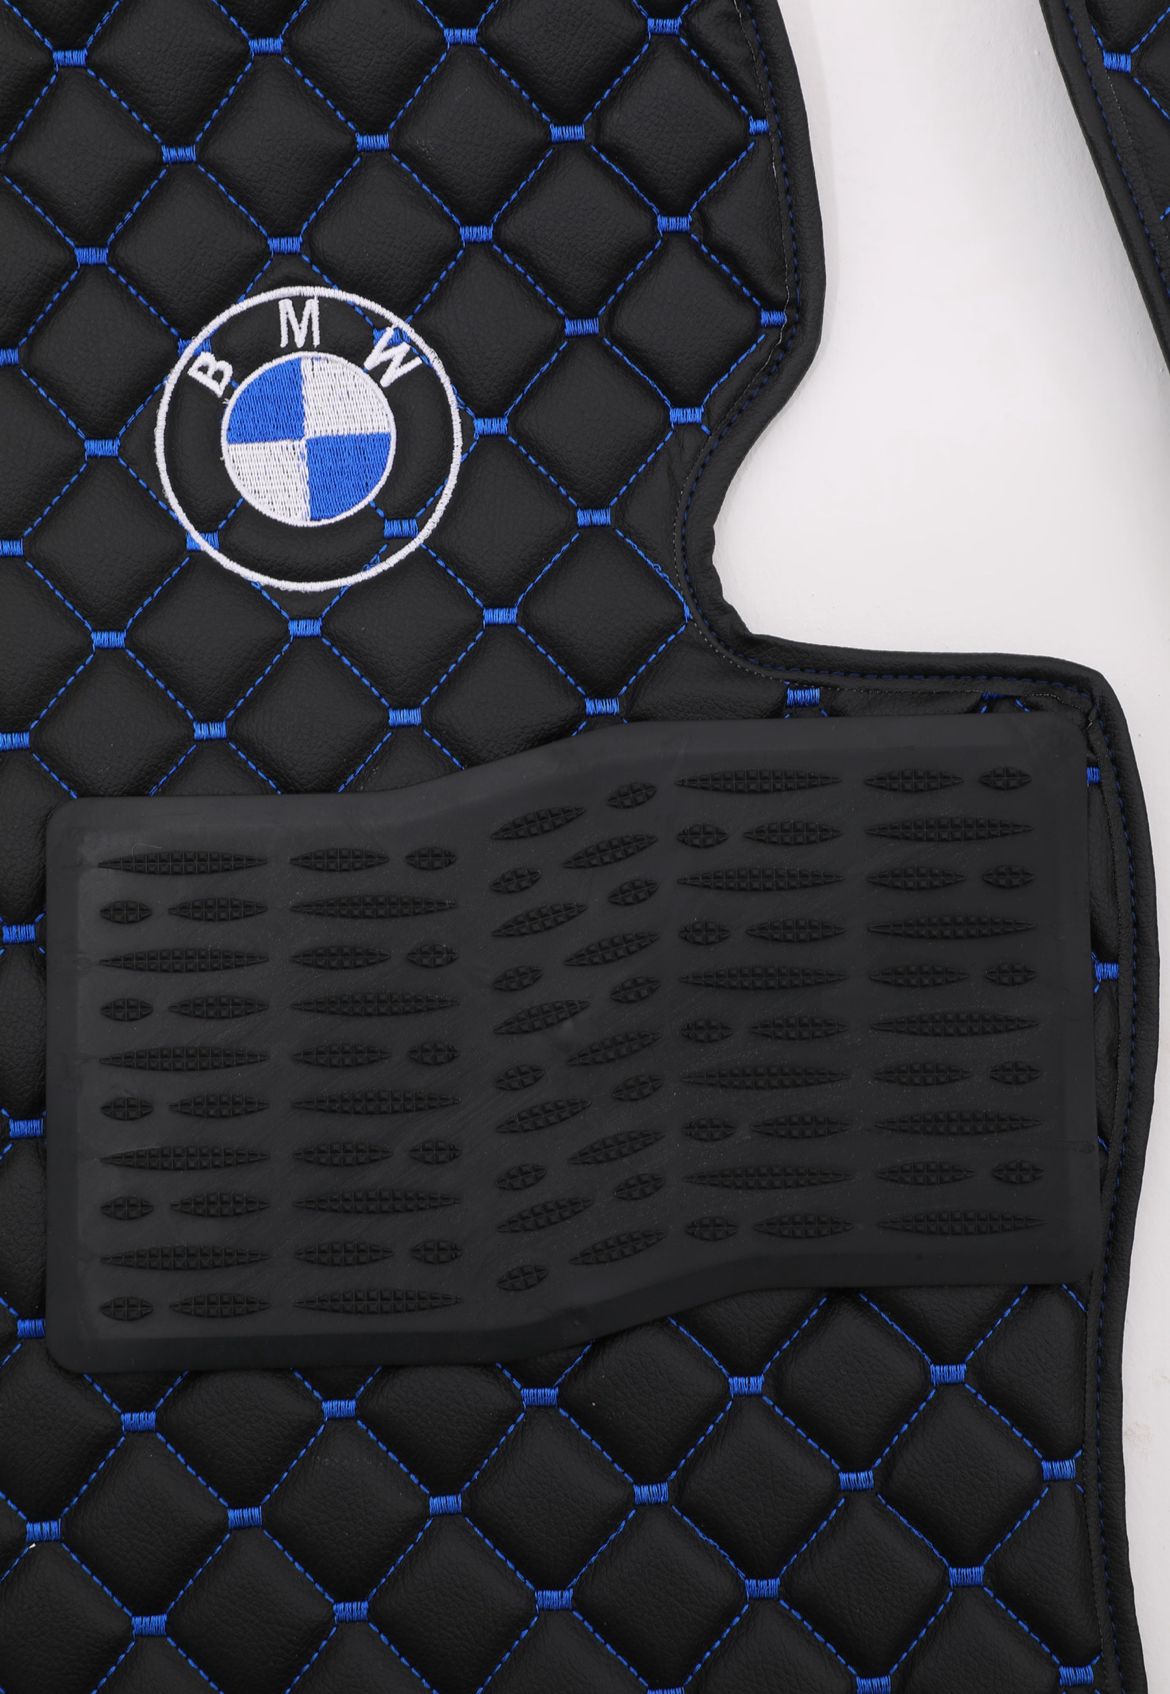 For all BMW F34 M Performance Luxury Leather Custom Car Mat 4x